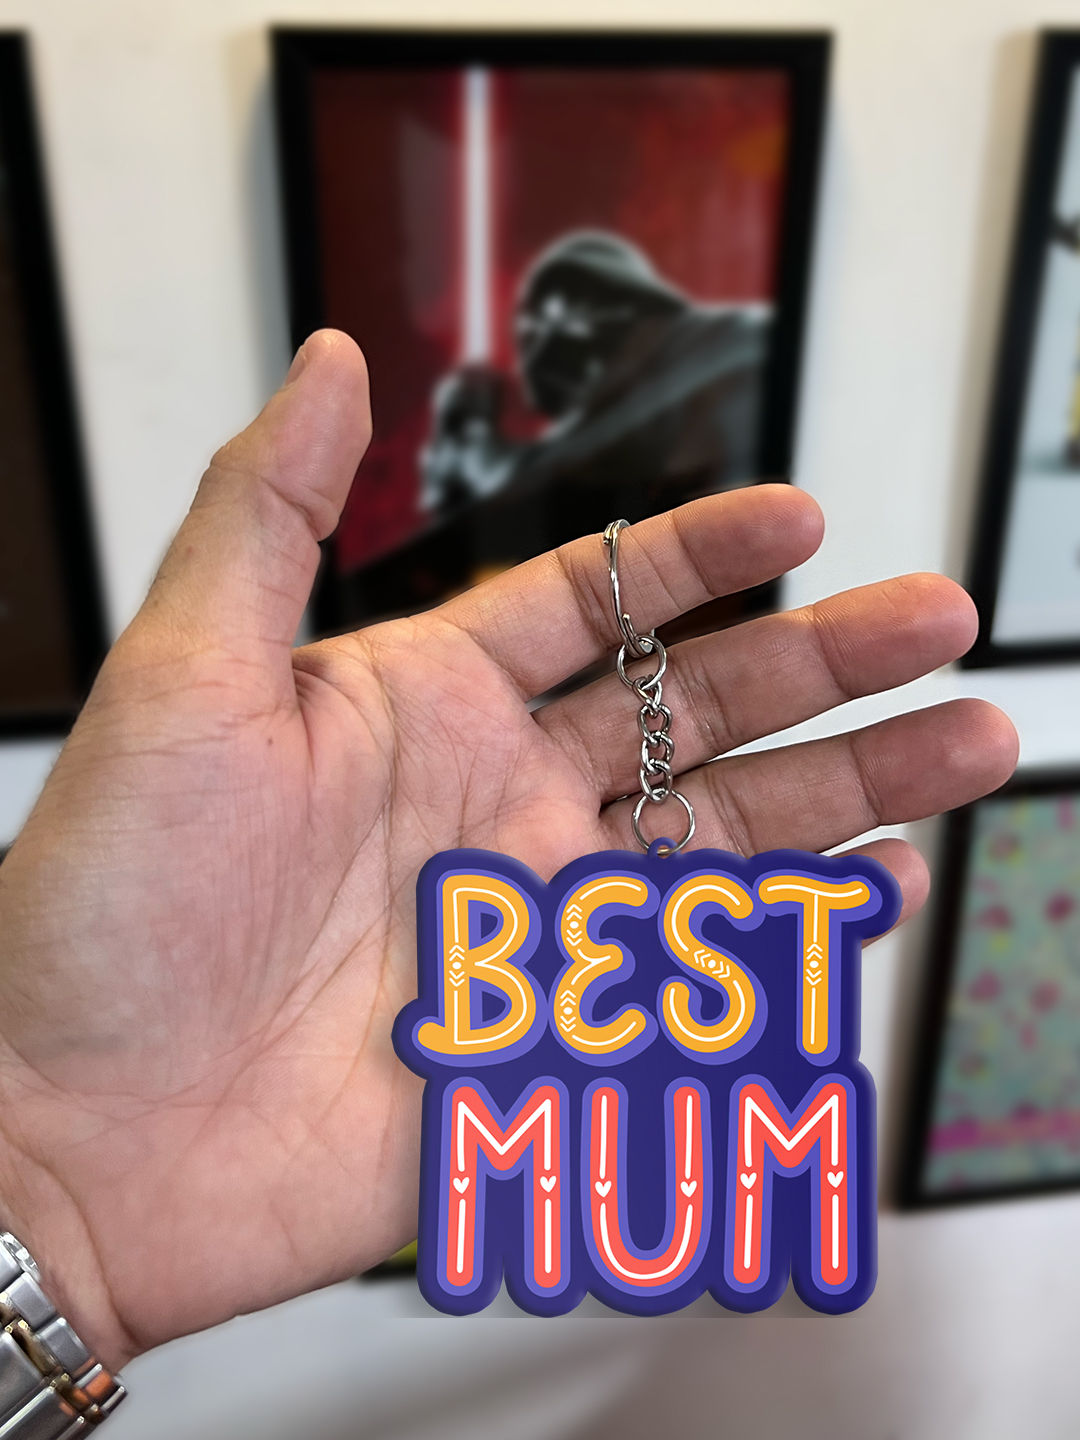 Best mum - Acrylic Keychains